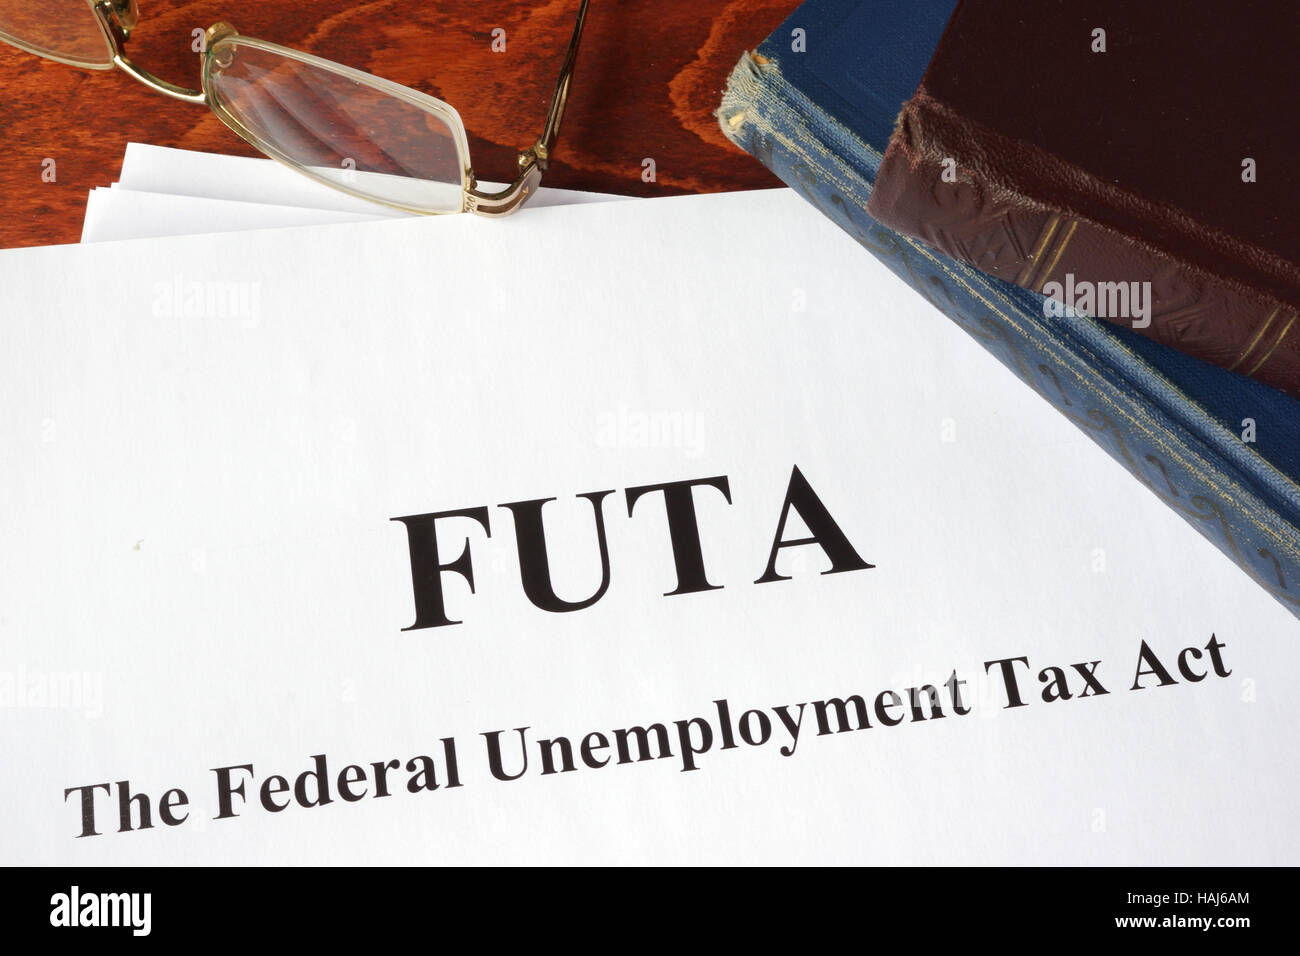 Papiere mit FUTA Bundesrepublik Arbeitslosigkeit Tax Act. Stockfoto